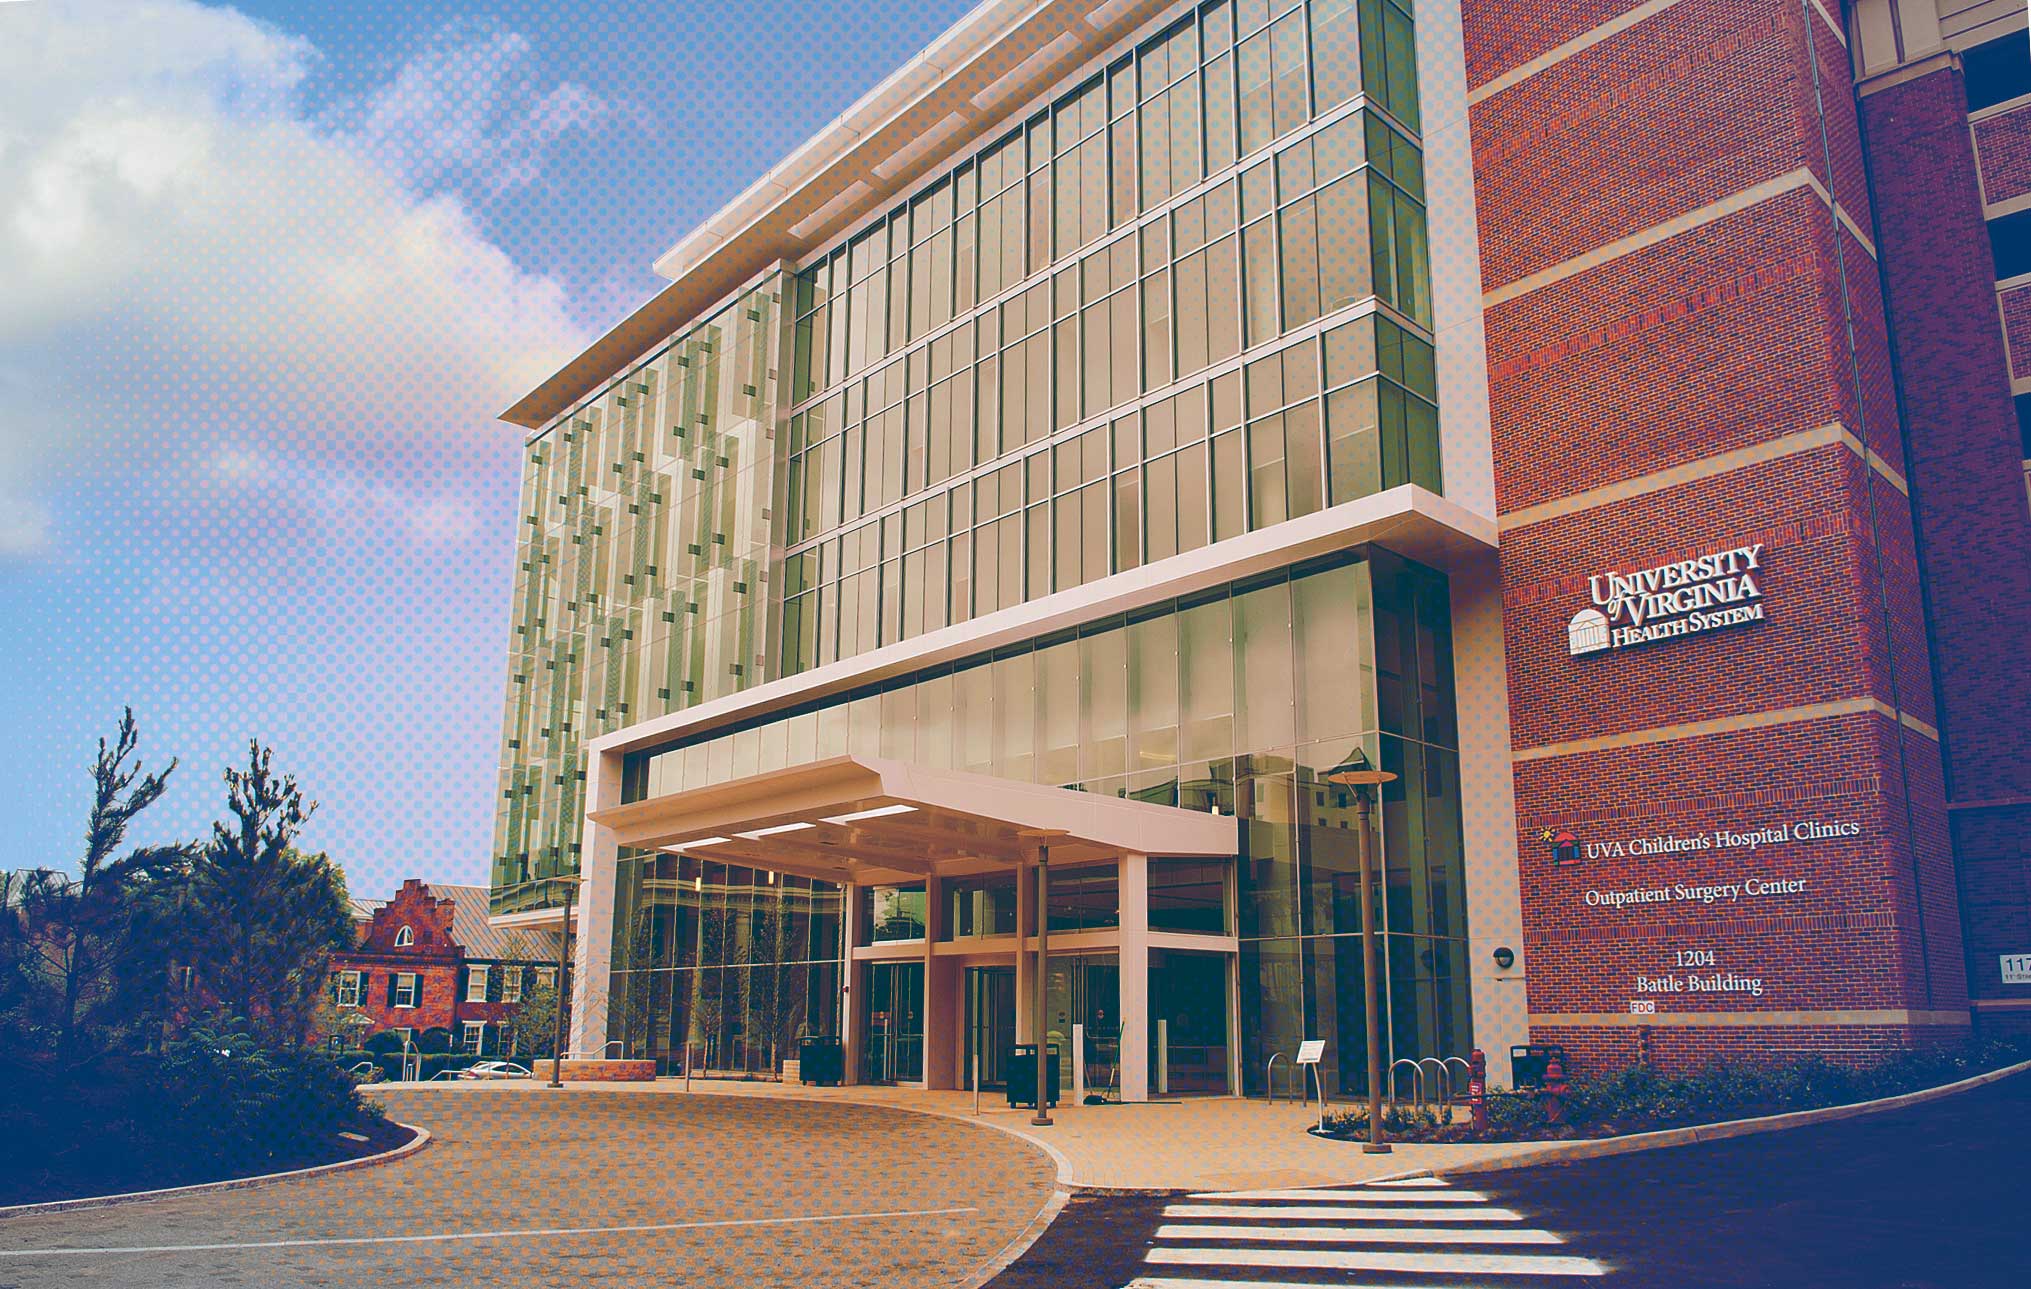 The Battle Building, home of the UVA Children’s Hospital, entrance